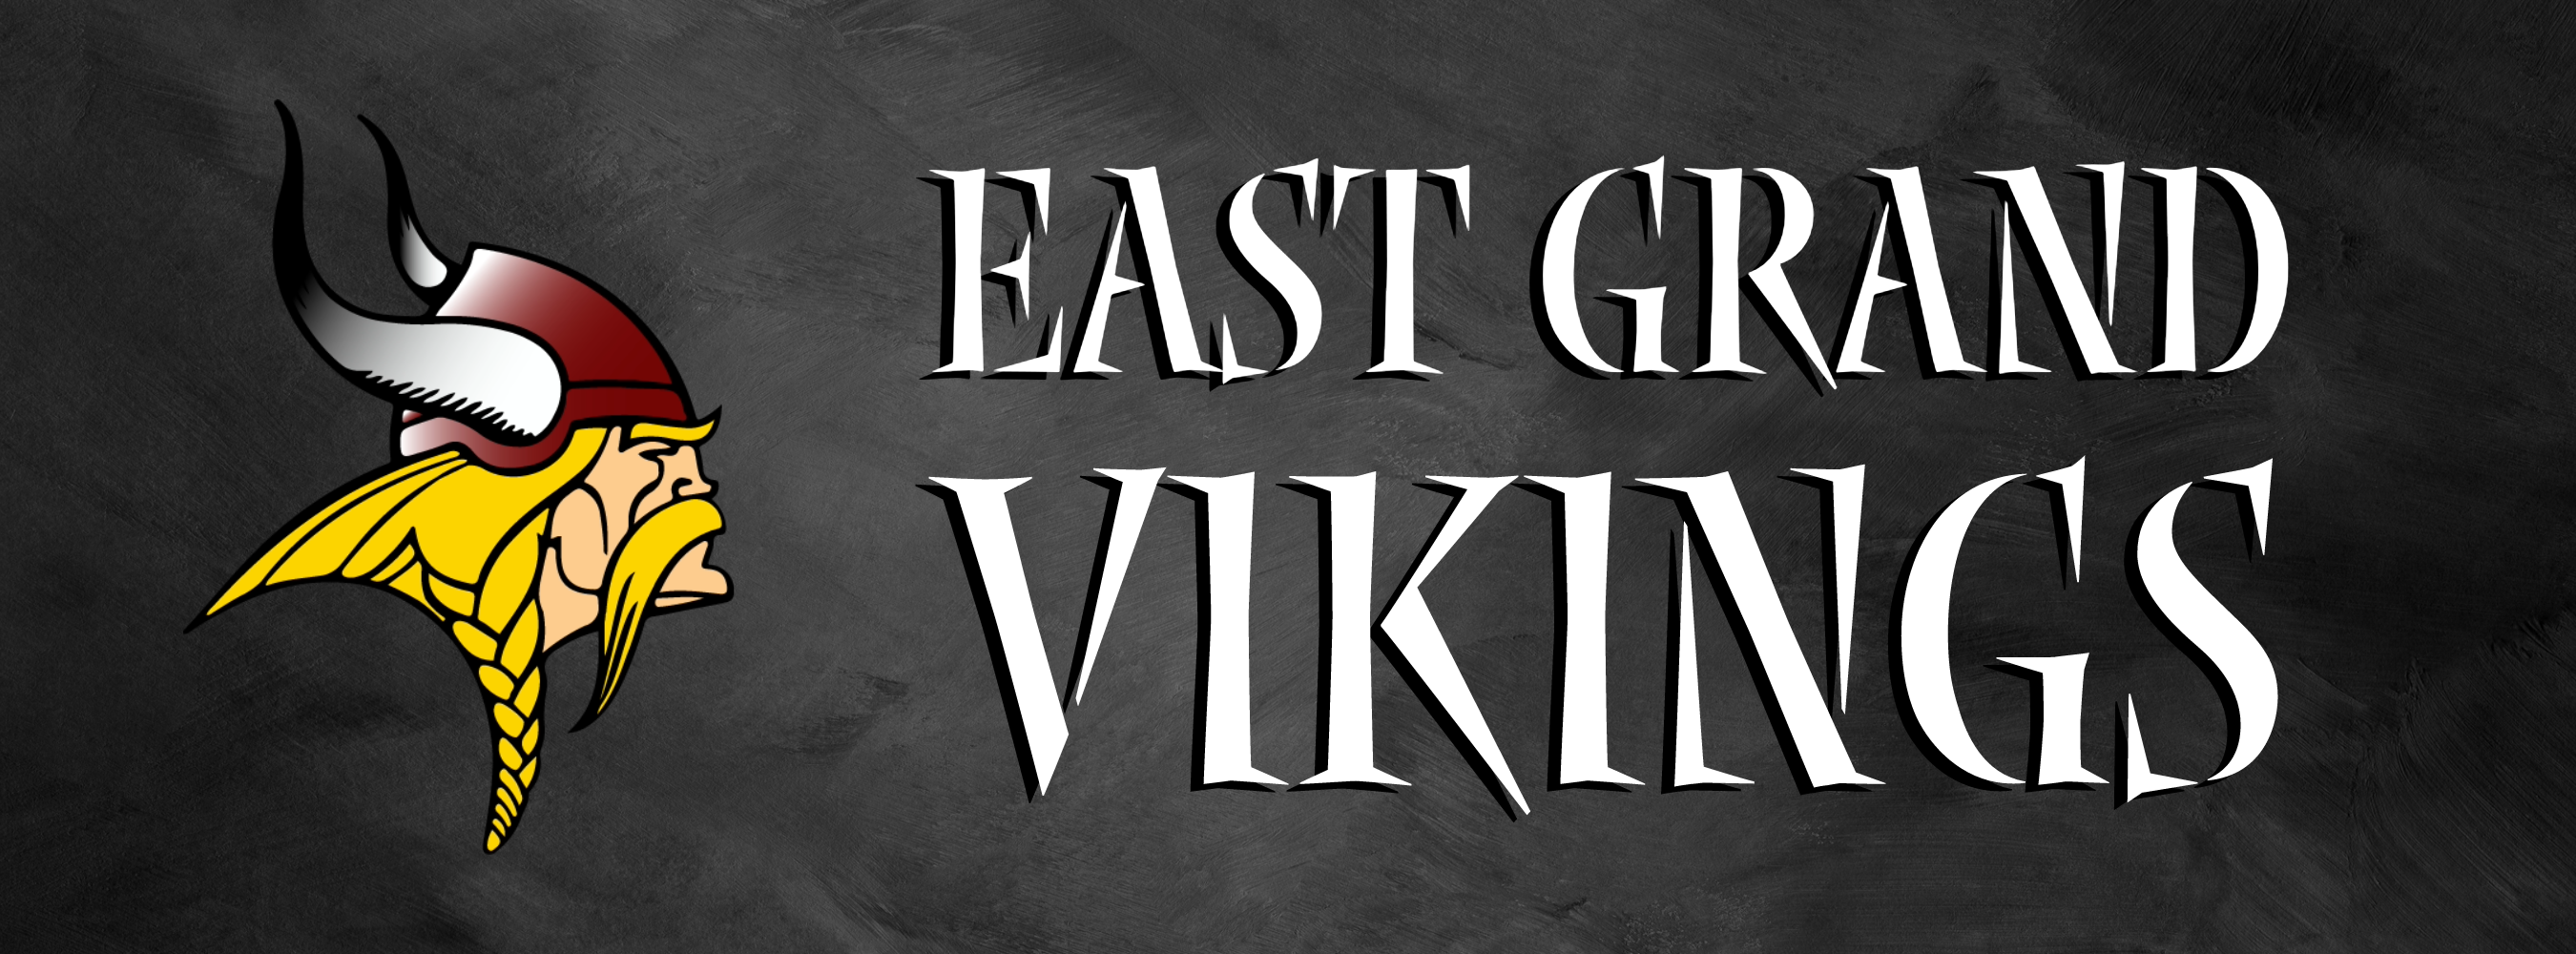 east grand vikings